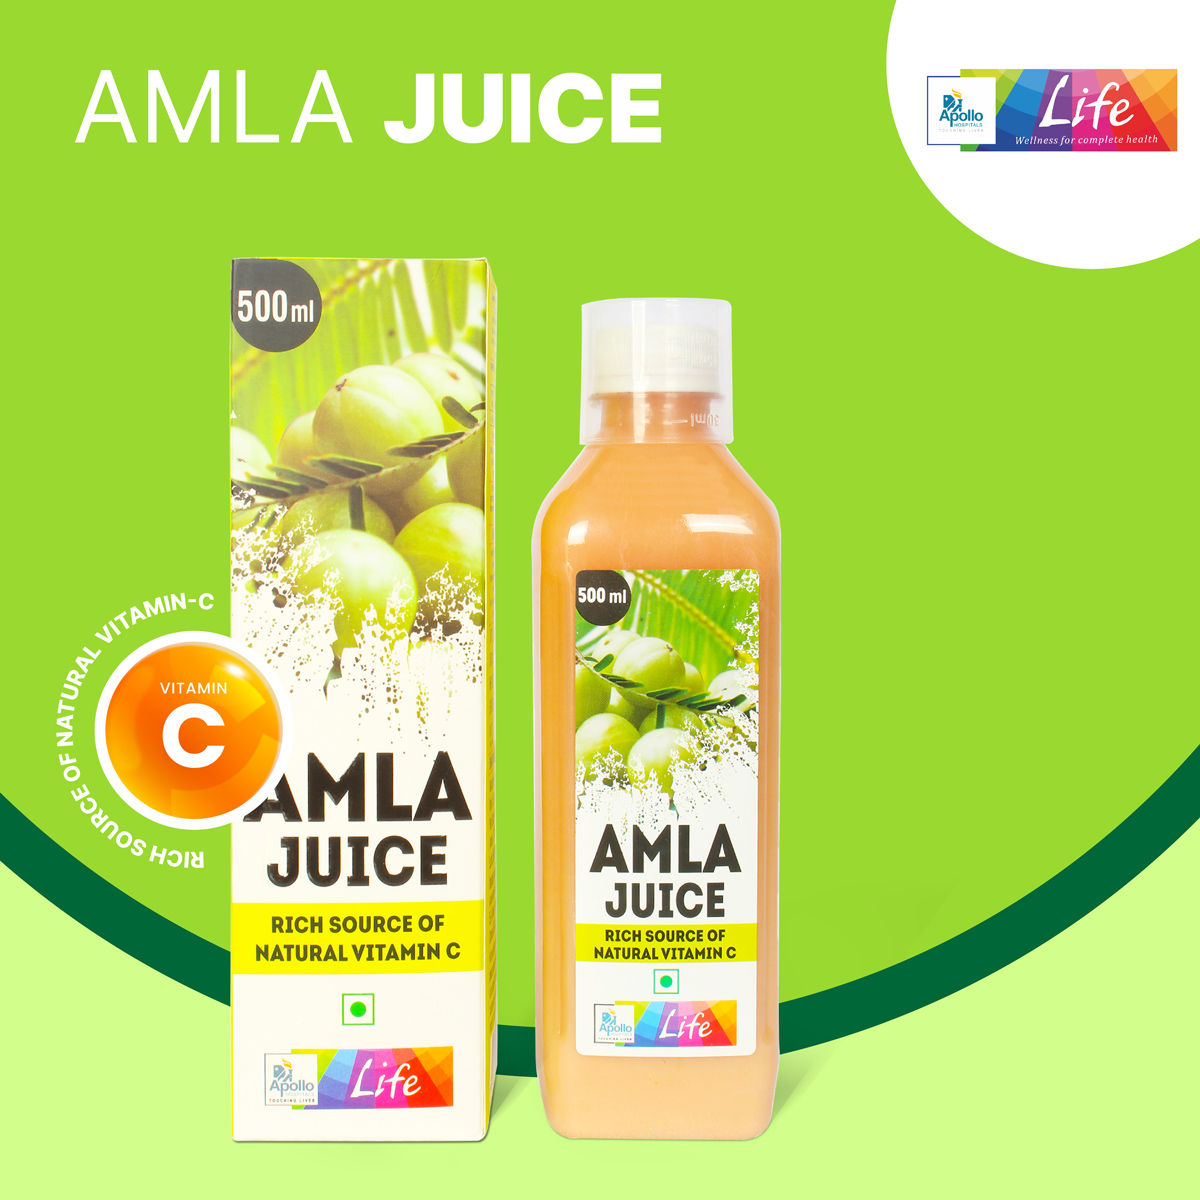 Apollo Life Natural Amla Juice, 500 ml, Pack of 1 